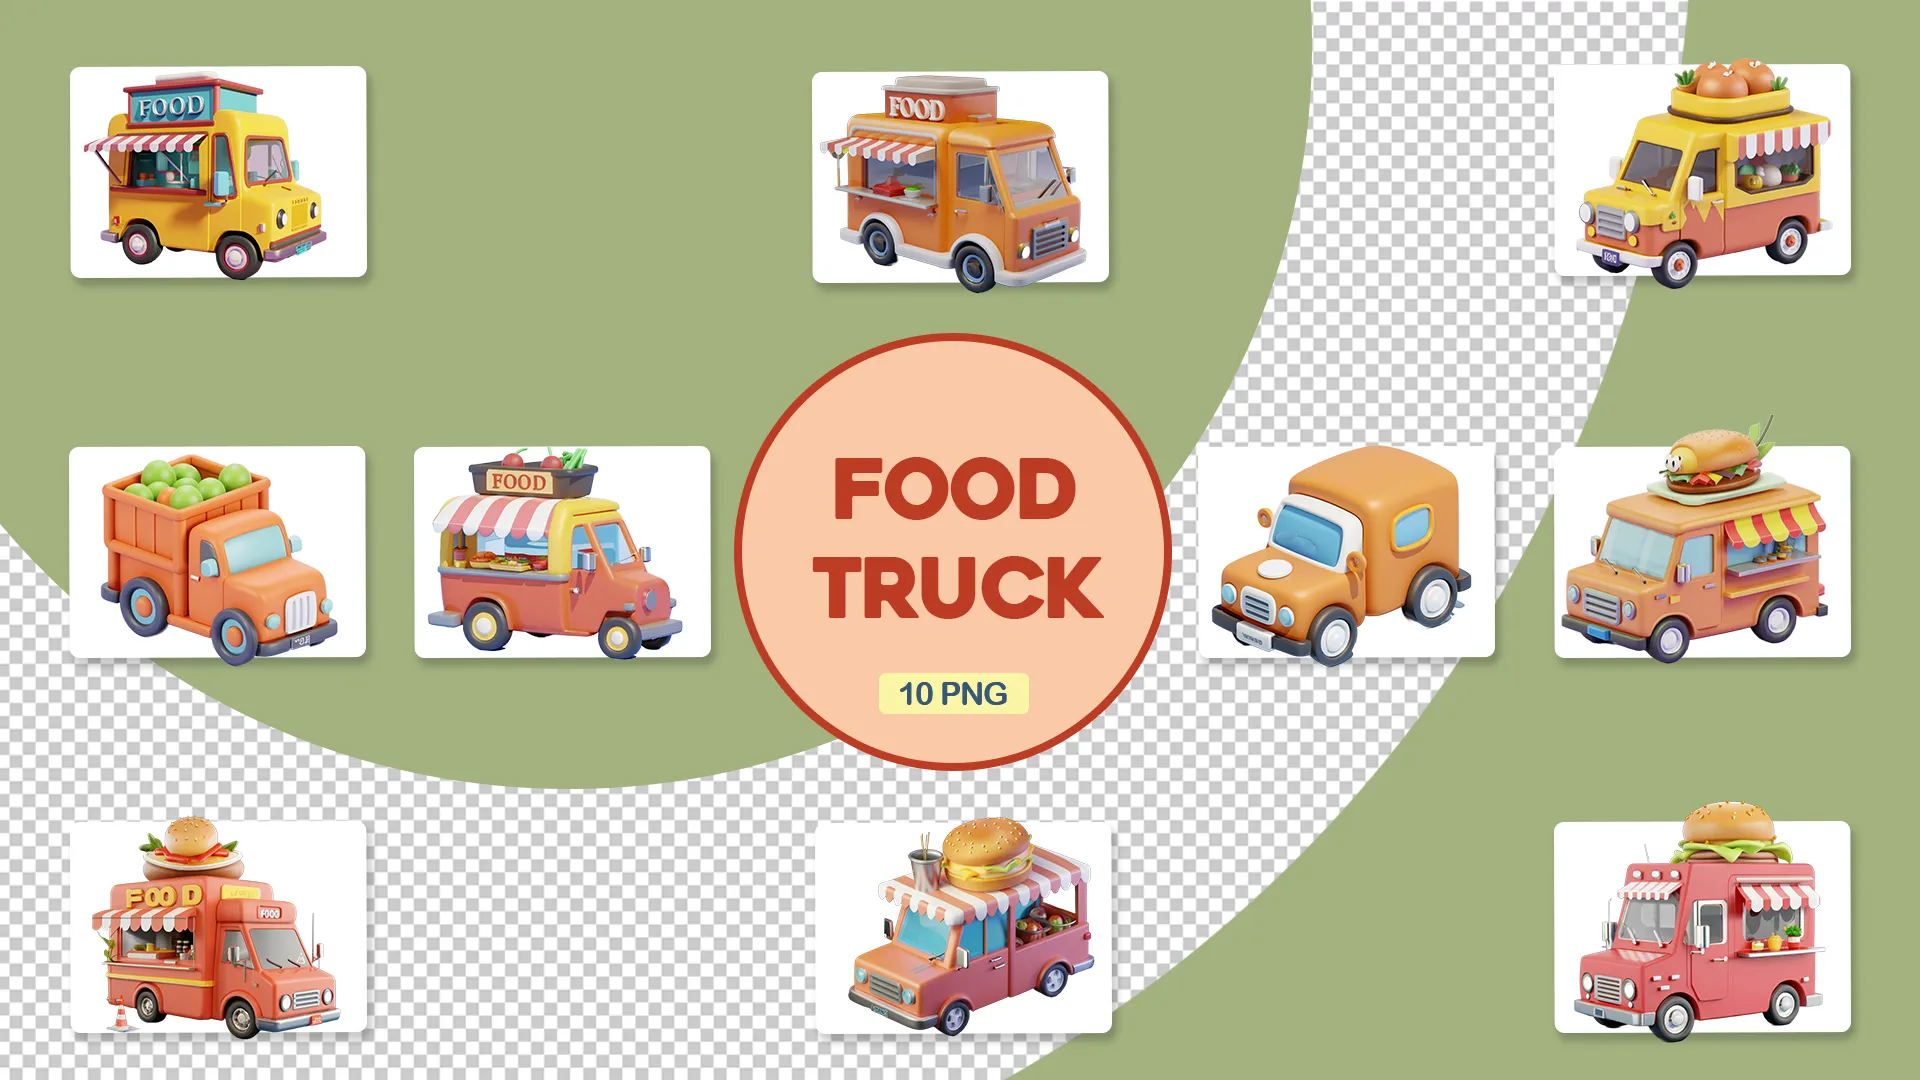 Unique Food Truck 3D Icons Collection image